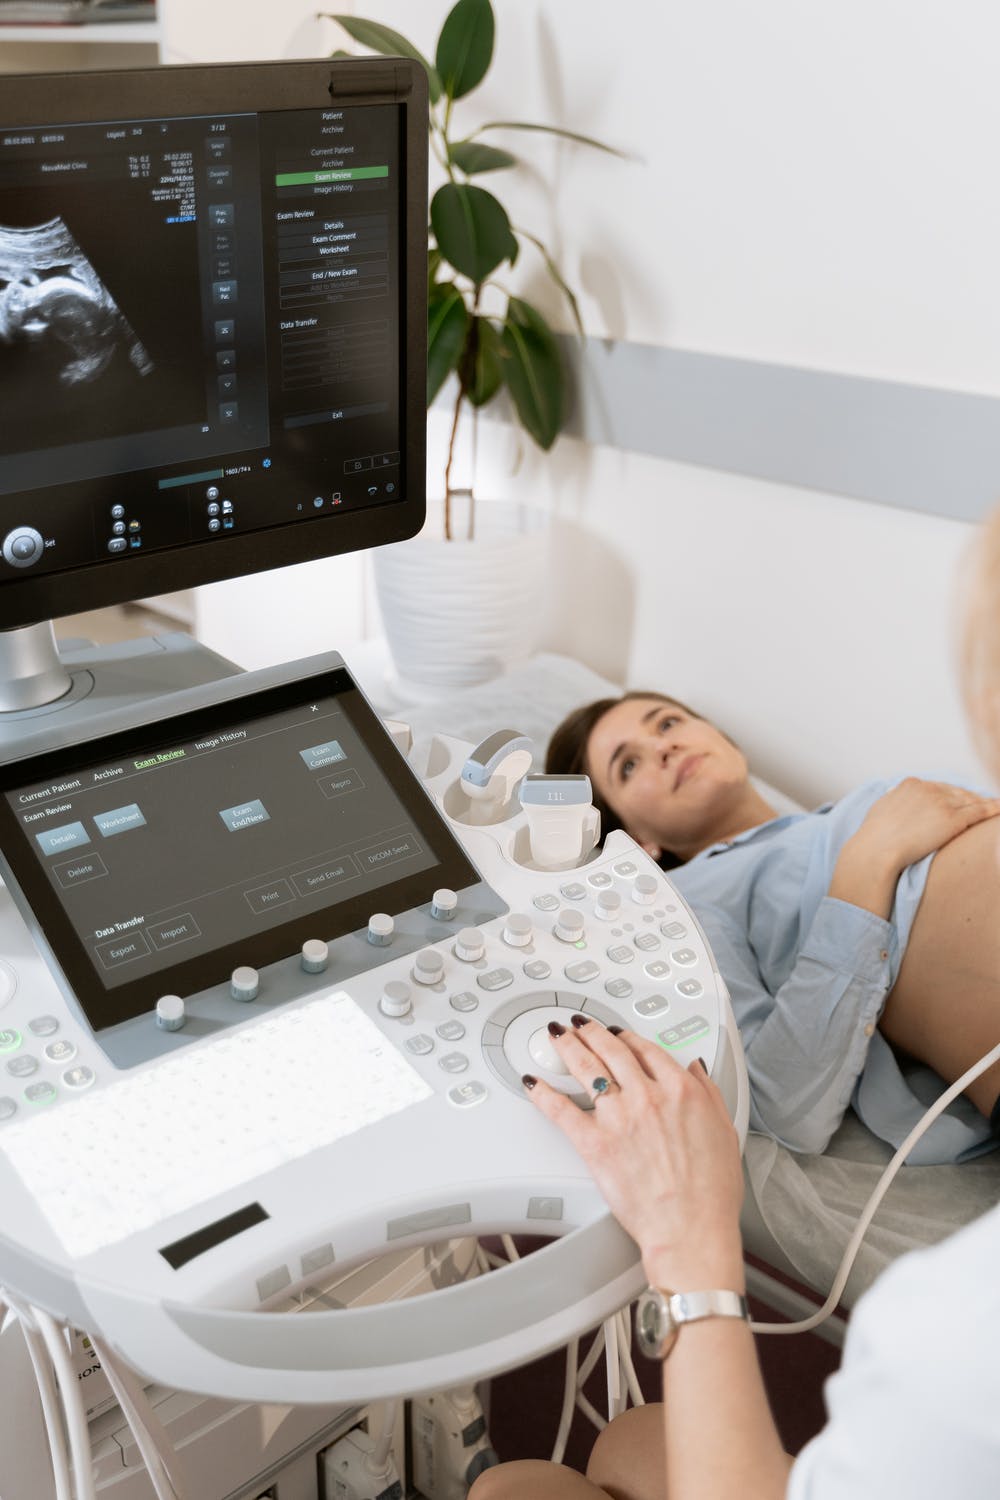 Pregnant woman having an ultrasound | Source: Pexels